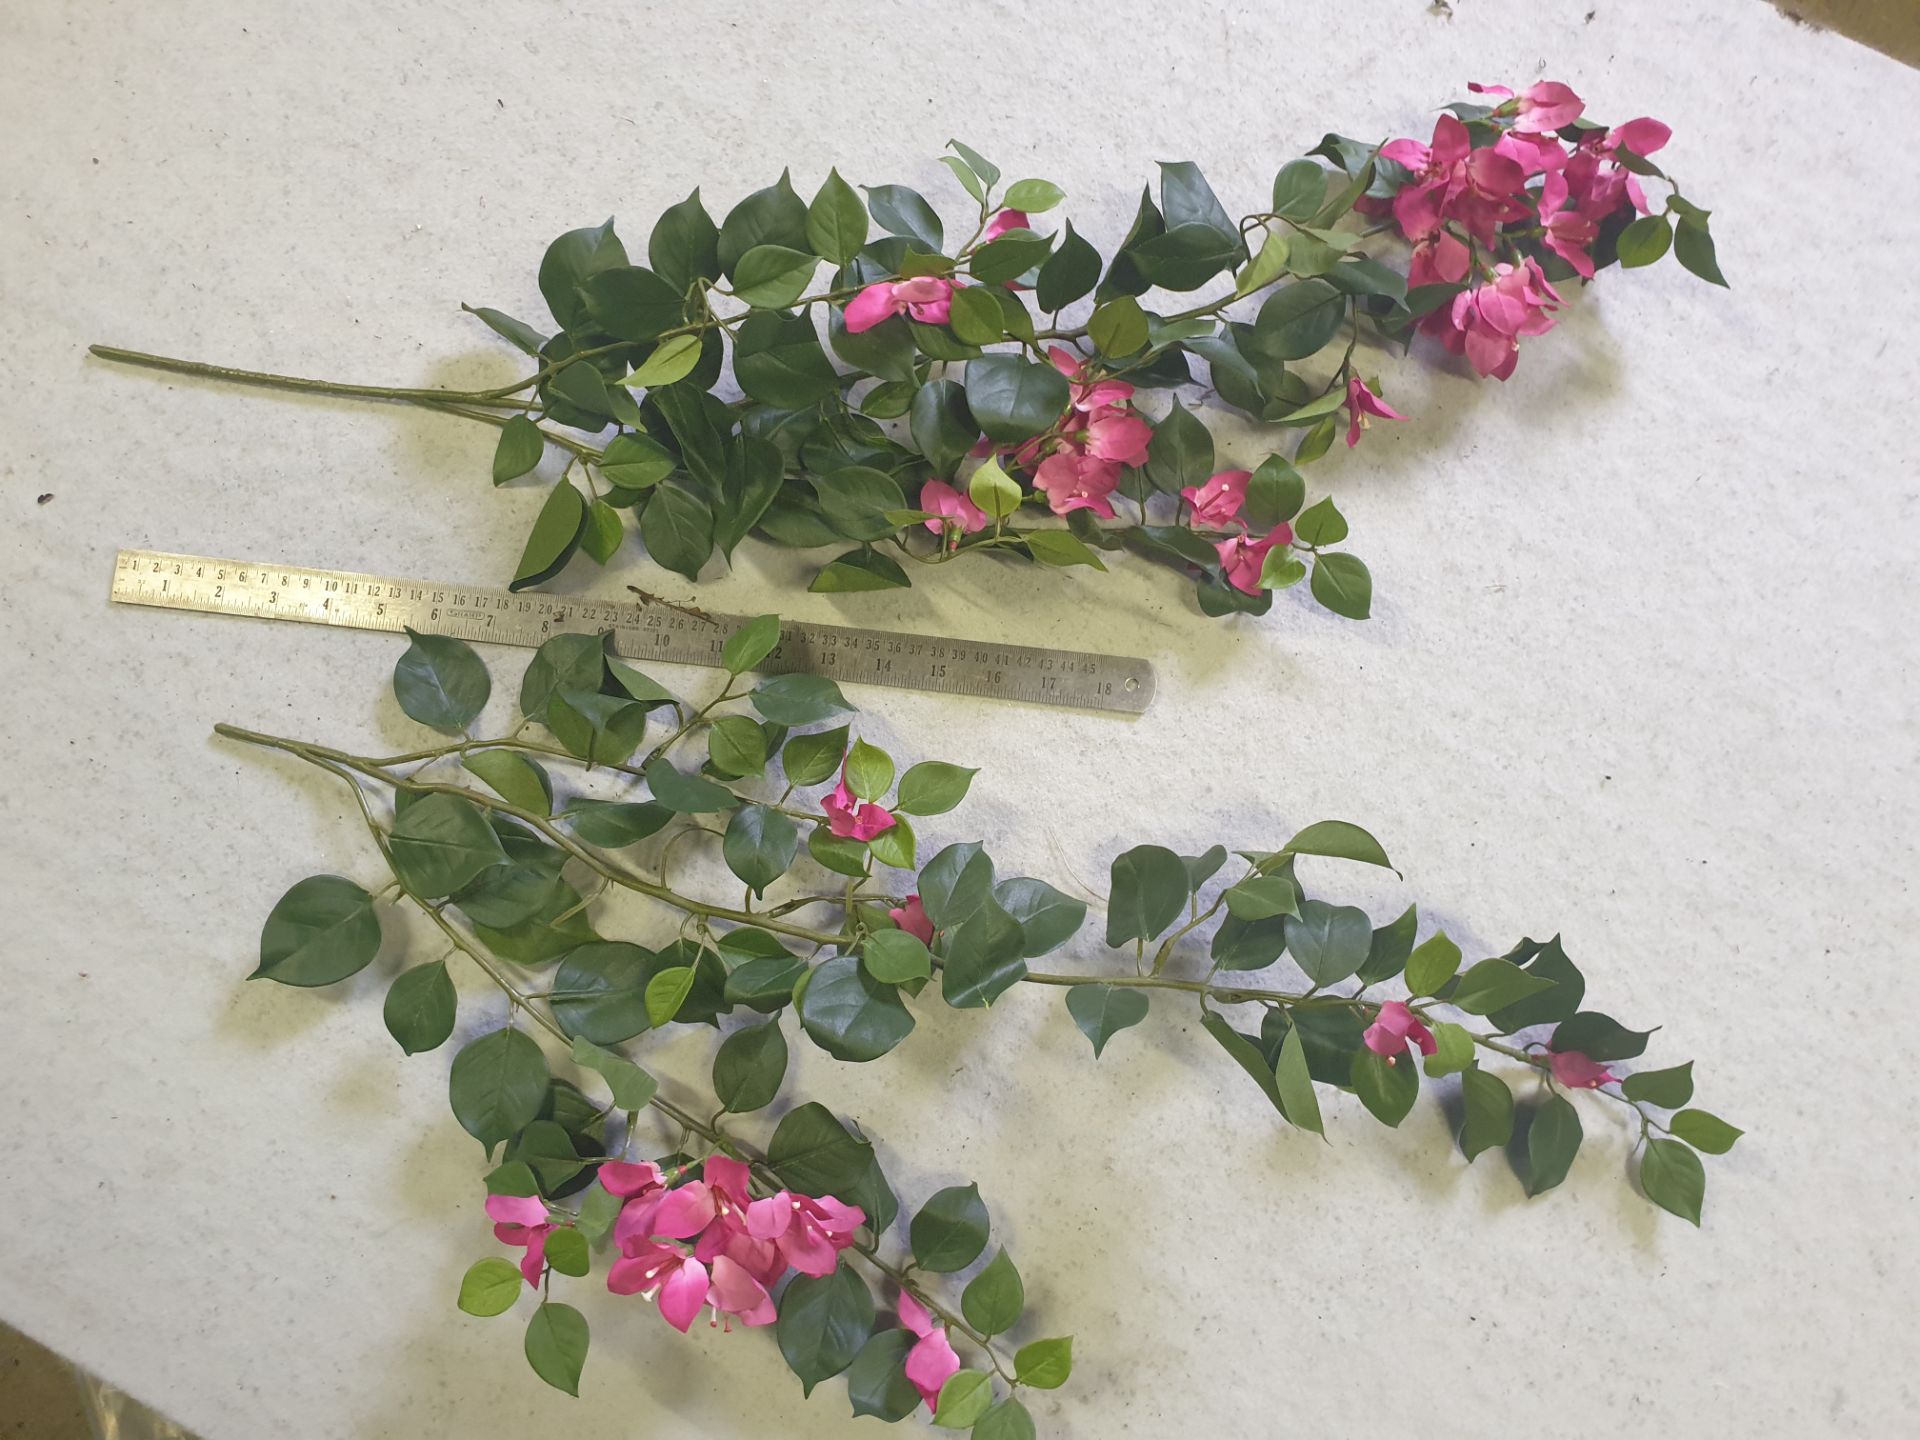 30 Pieces of Artificial Bougainvillea bush FR - Pink - used